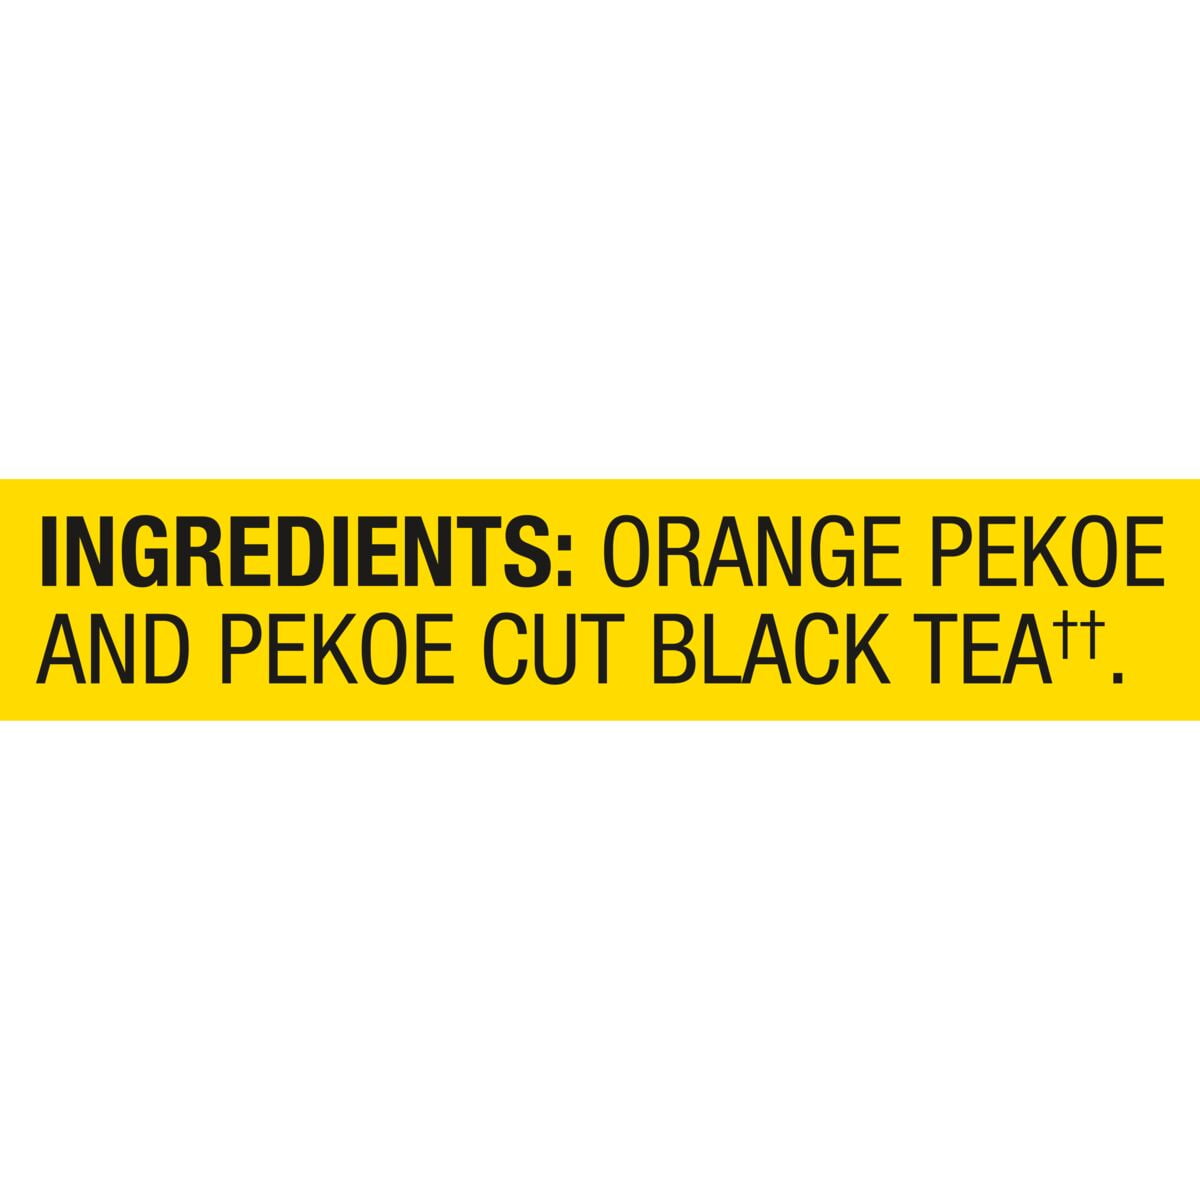 Lipton 100% Natural Tea Black, Tea Bags, 100 Ct